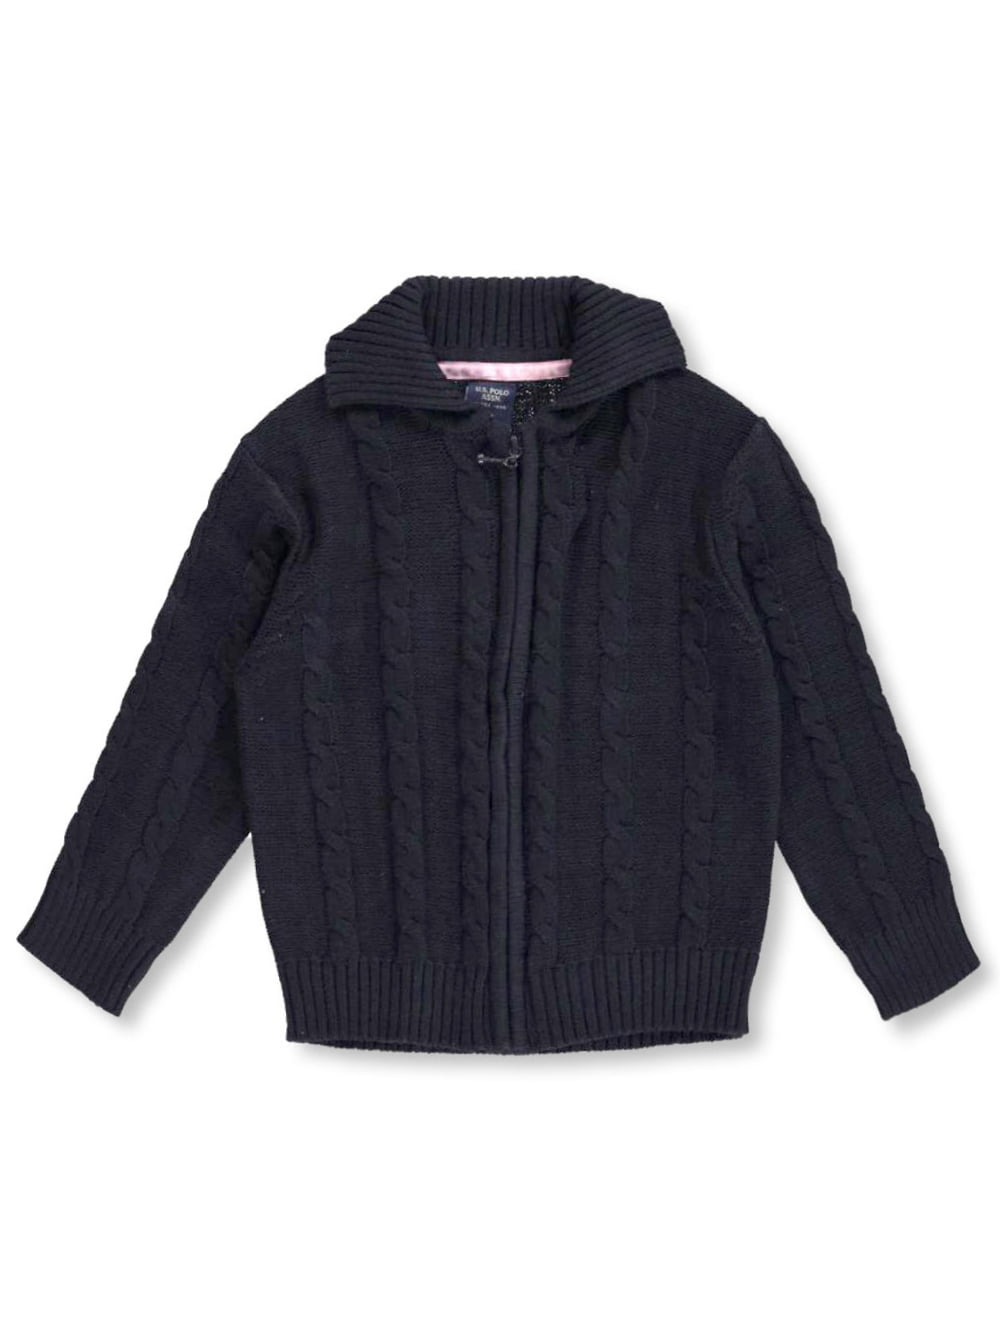 Girls Cardigan Sweater Polo Assn U.S